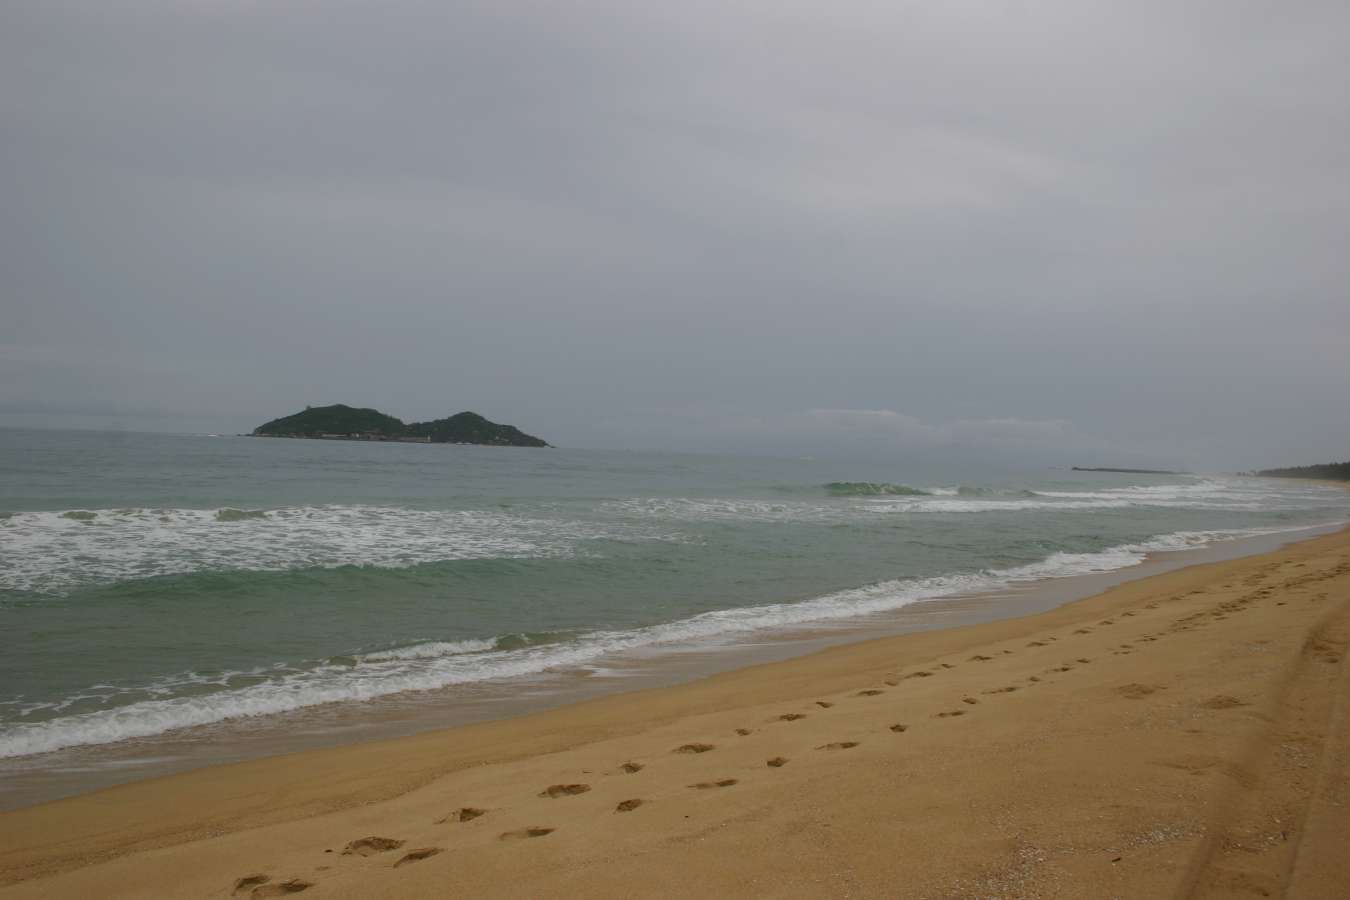 Boundary island from the beach south of Riyue Bay